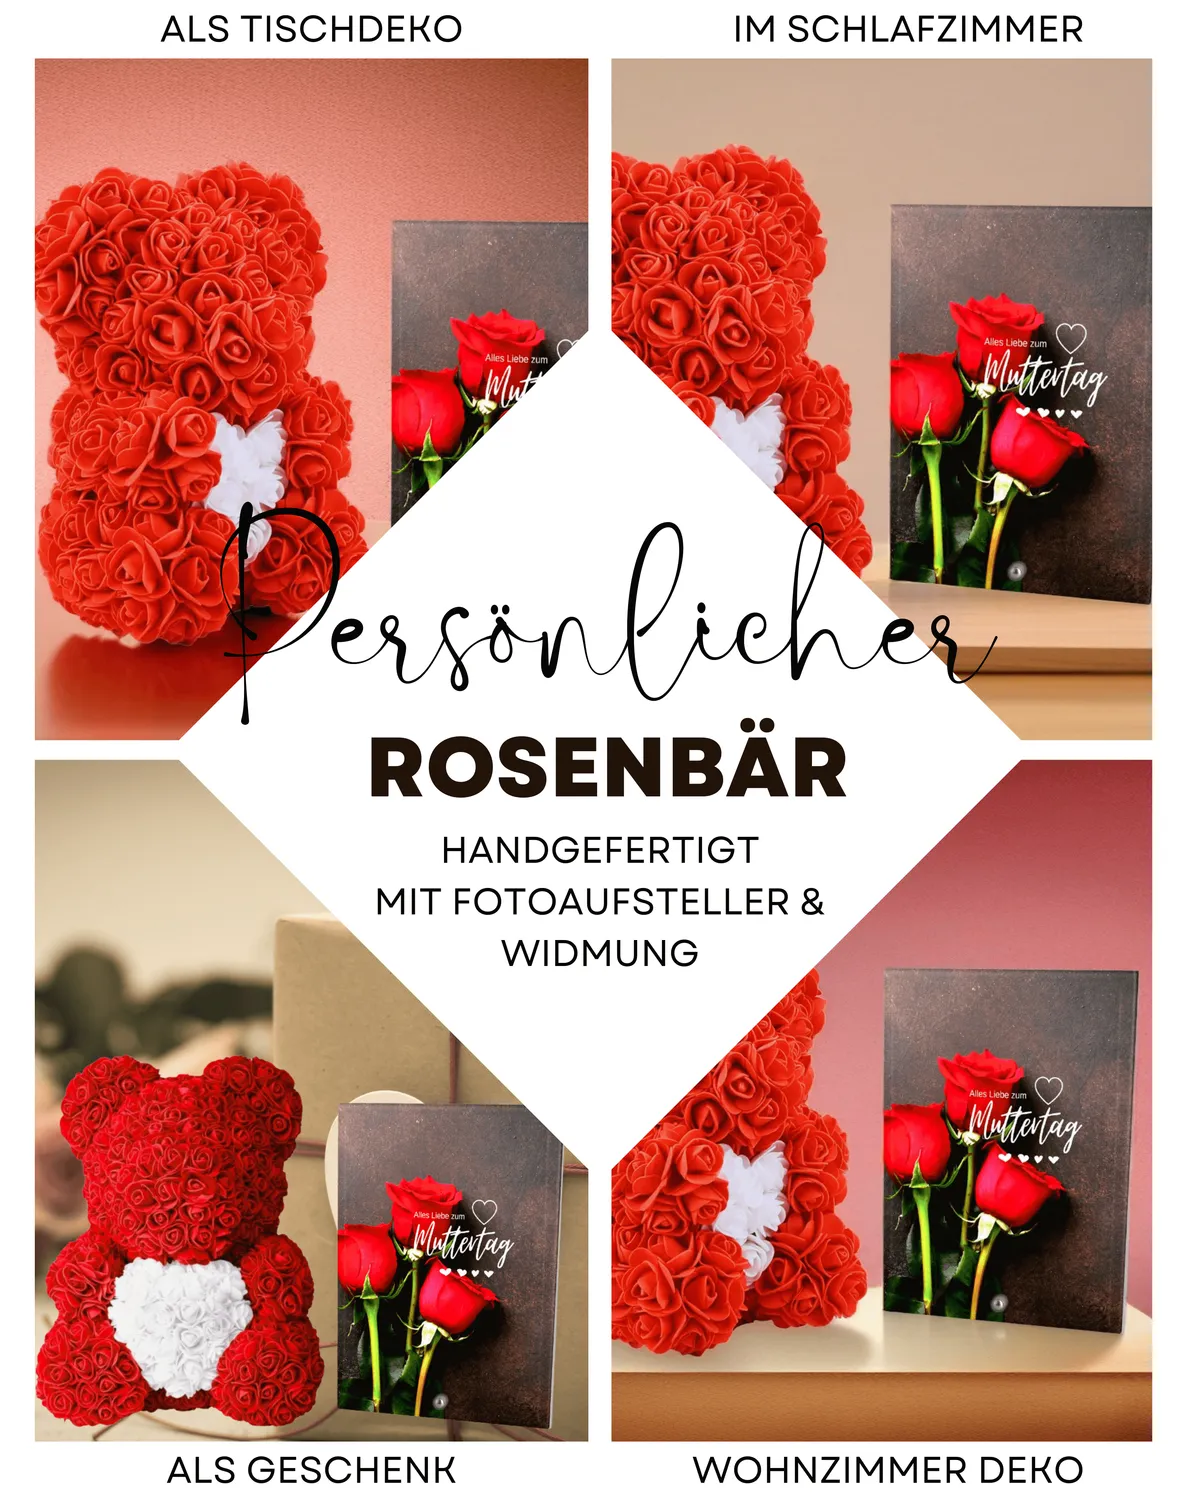 Personalisierter Rosenbär mit Fotoaufsteller